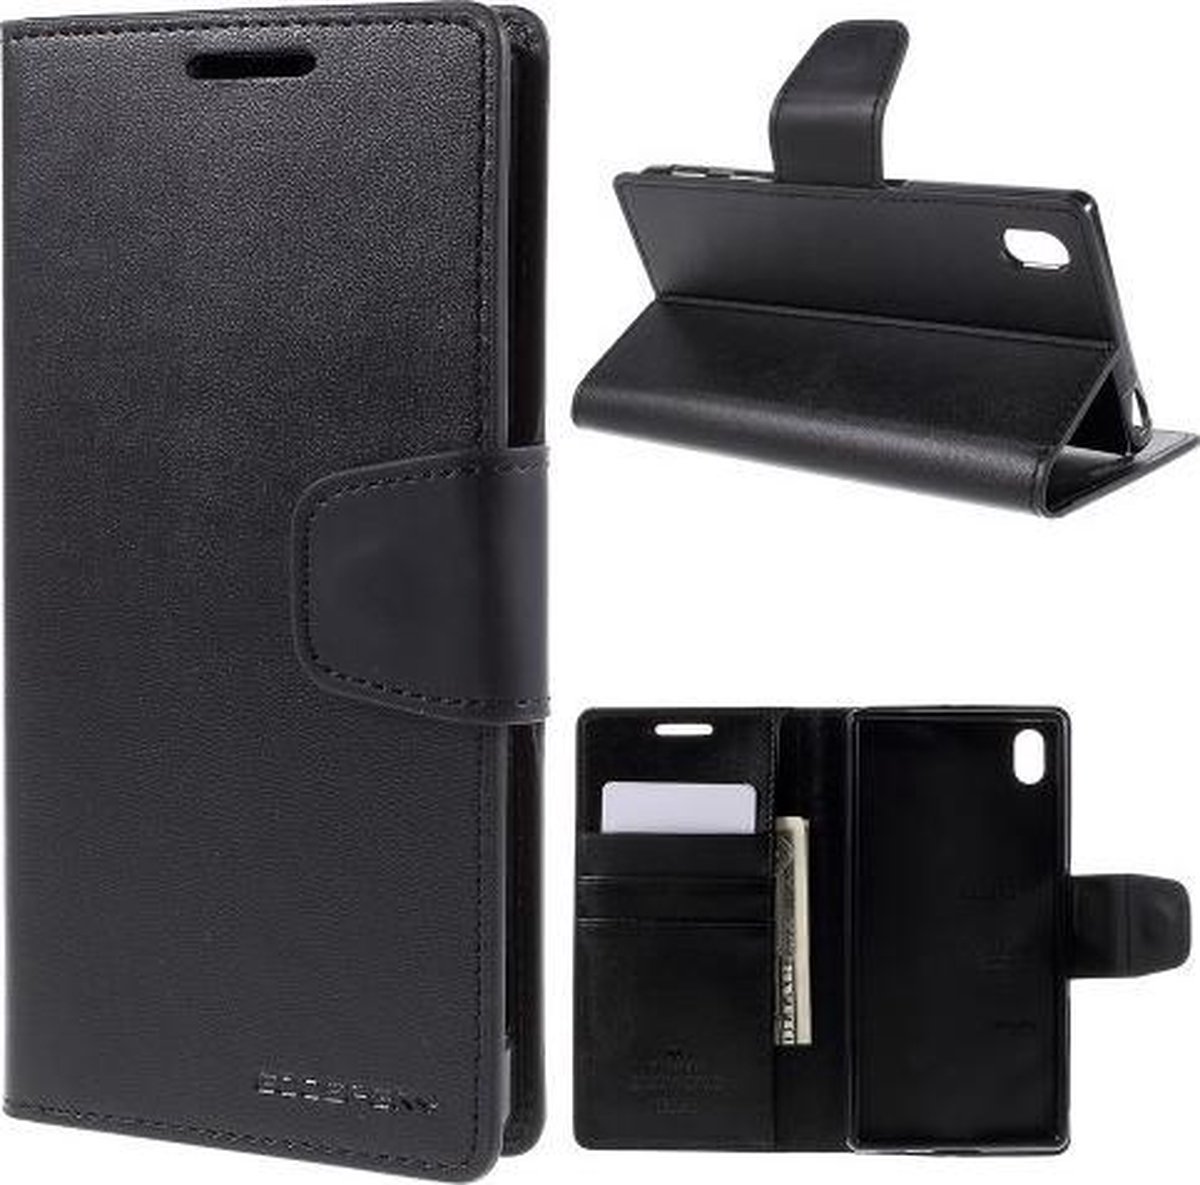 Goospery Sonata Leather case hoesje Sony Xperia Z5 zwart